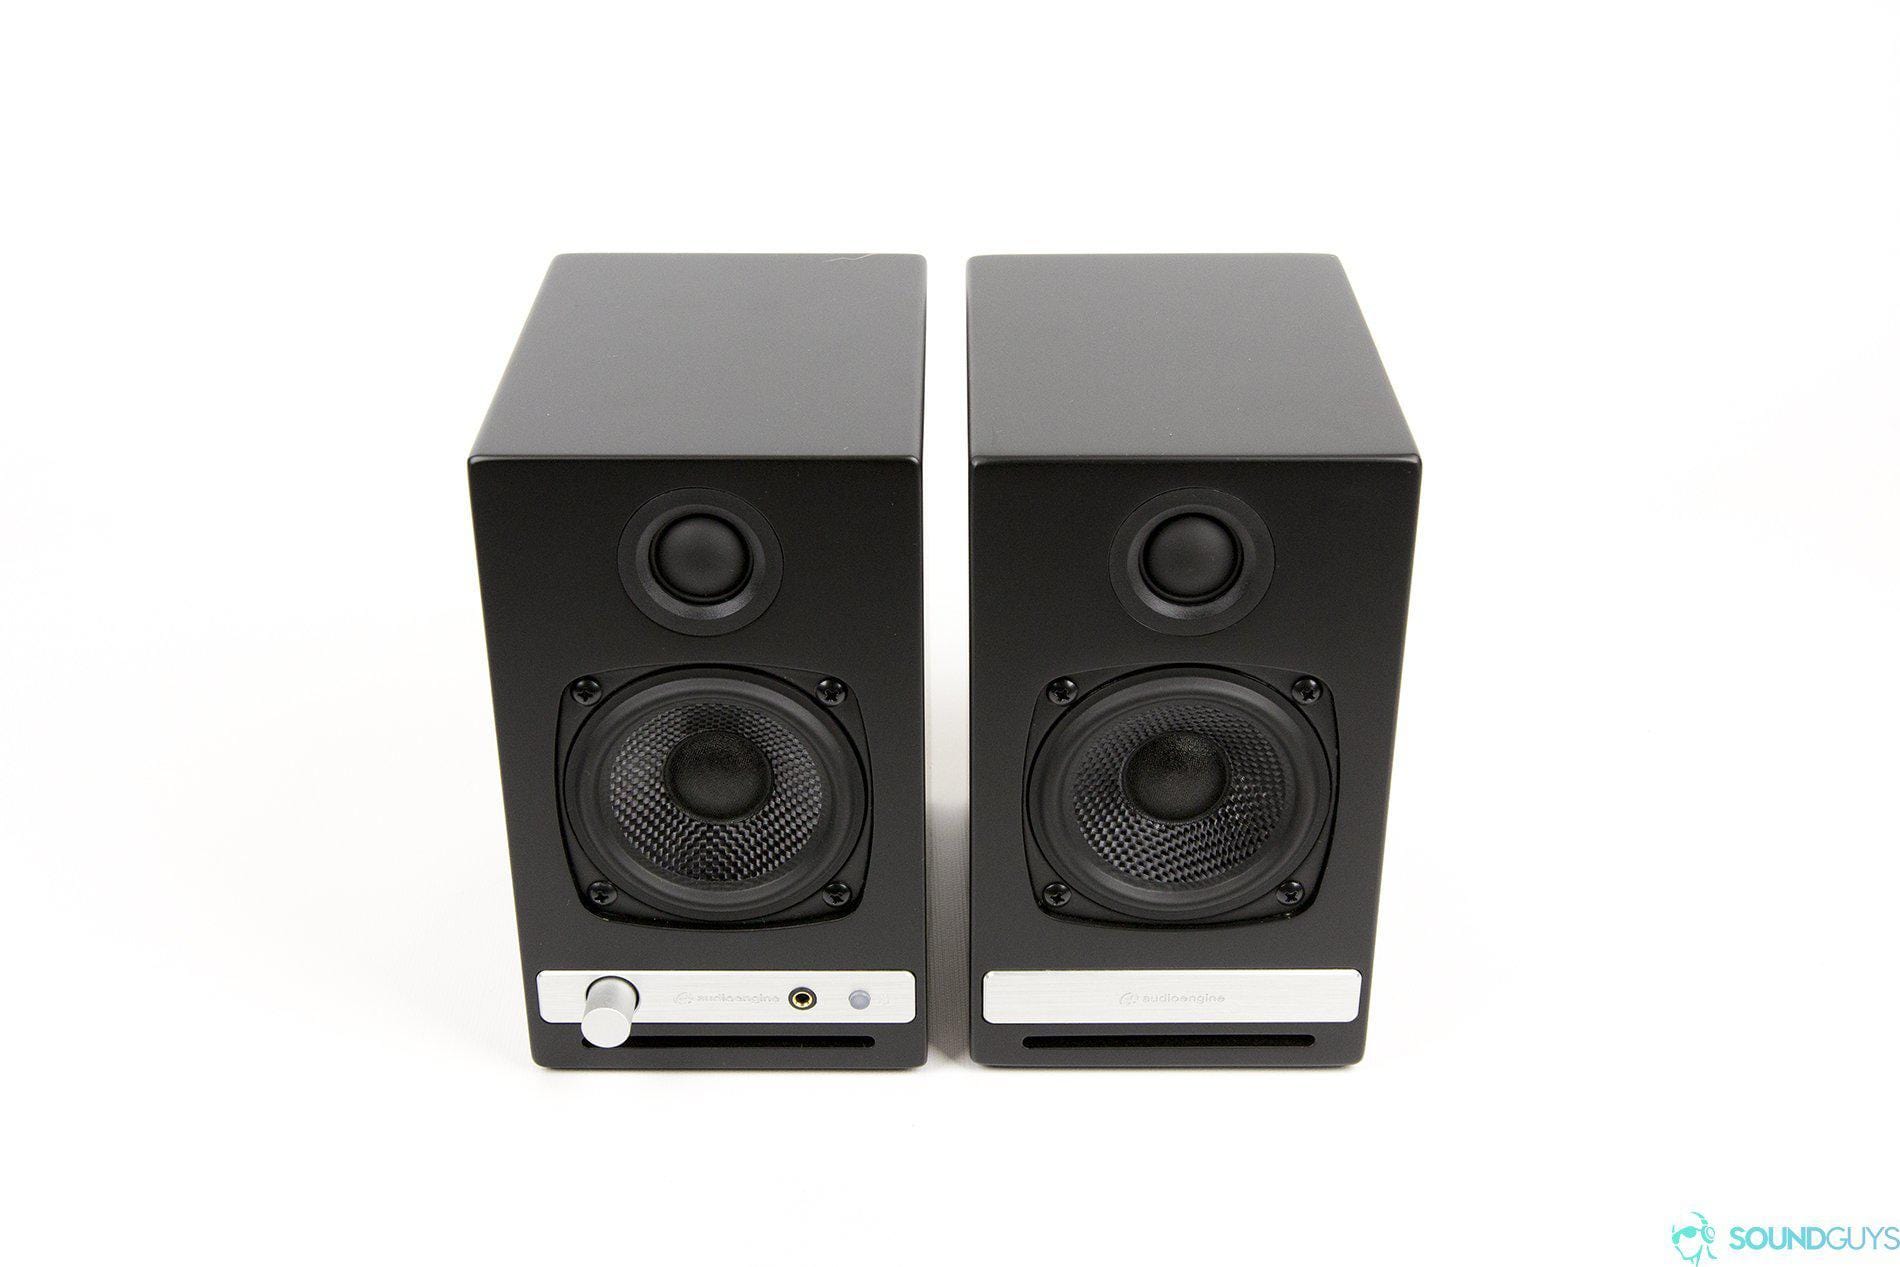 Audioengine Active Speakers Audioengine HD3 Premium Wireless Speakers - Satin Black